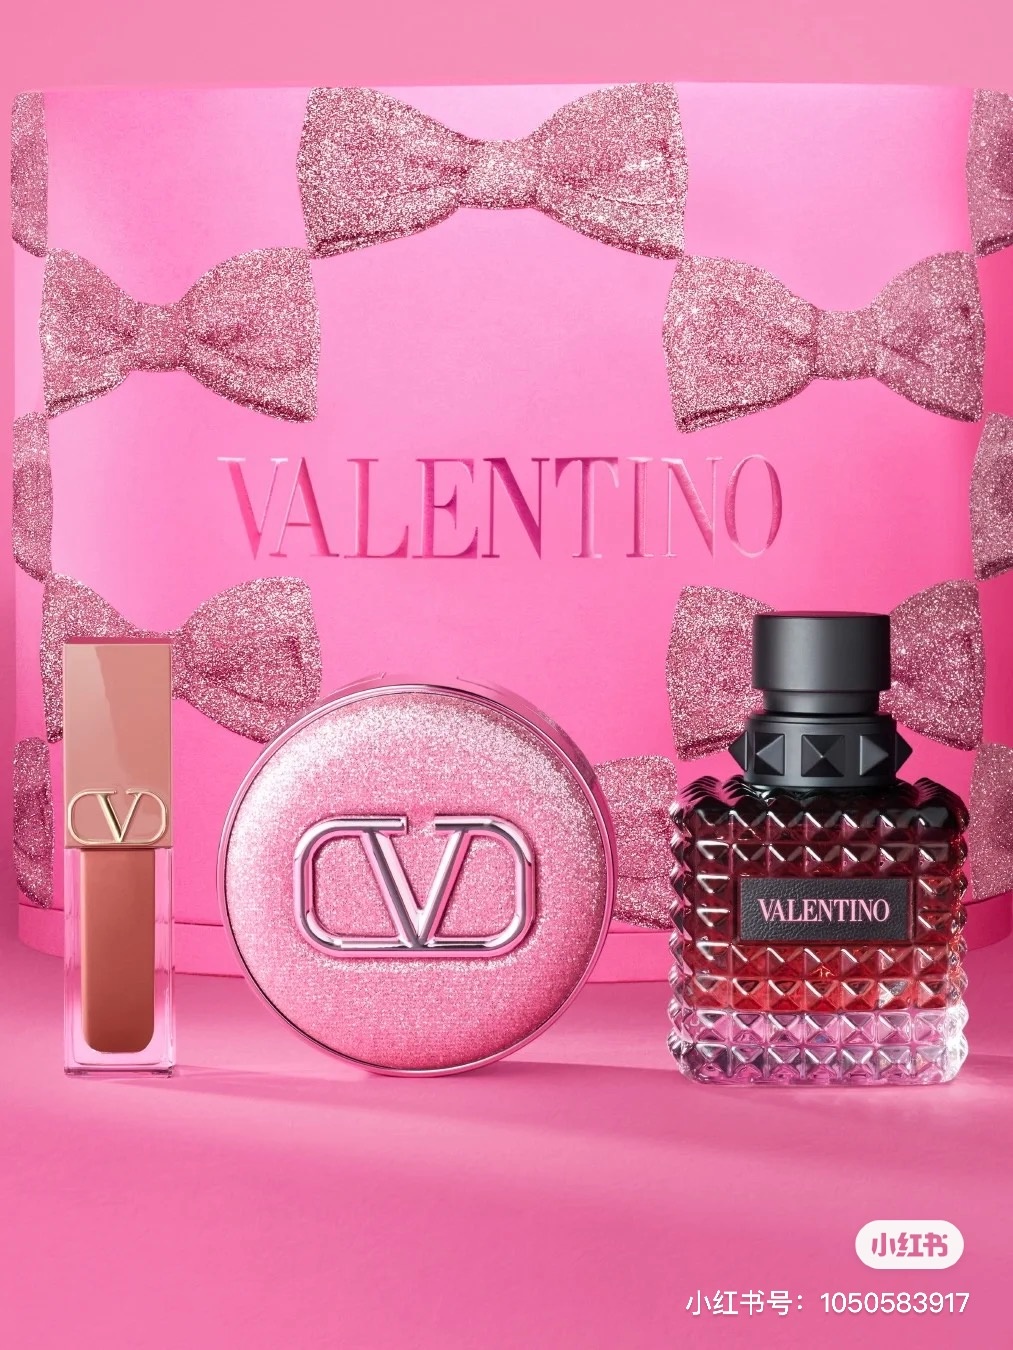 Valentino '520' limited edition gift box. Image: Valentino Xiaohongshu